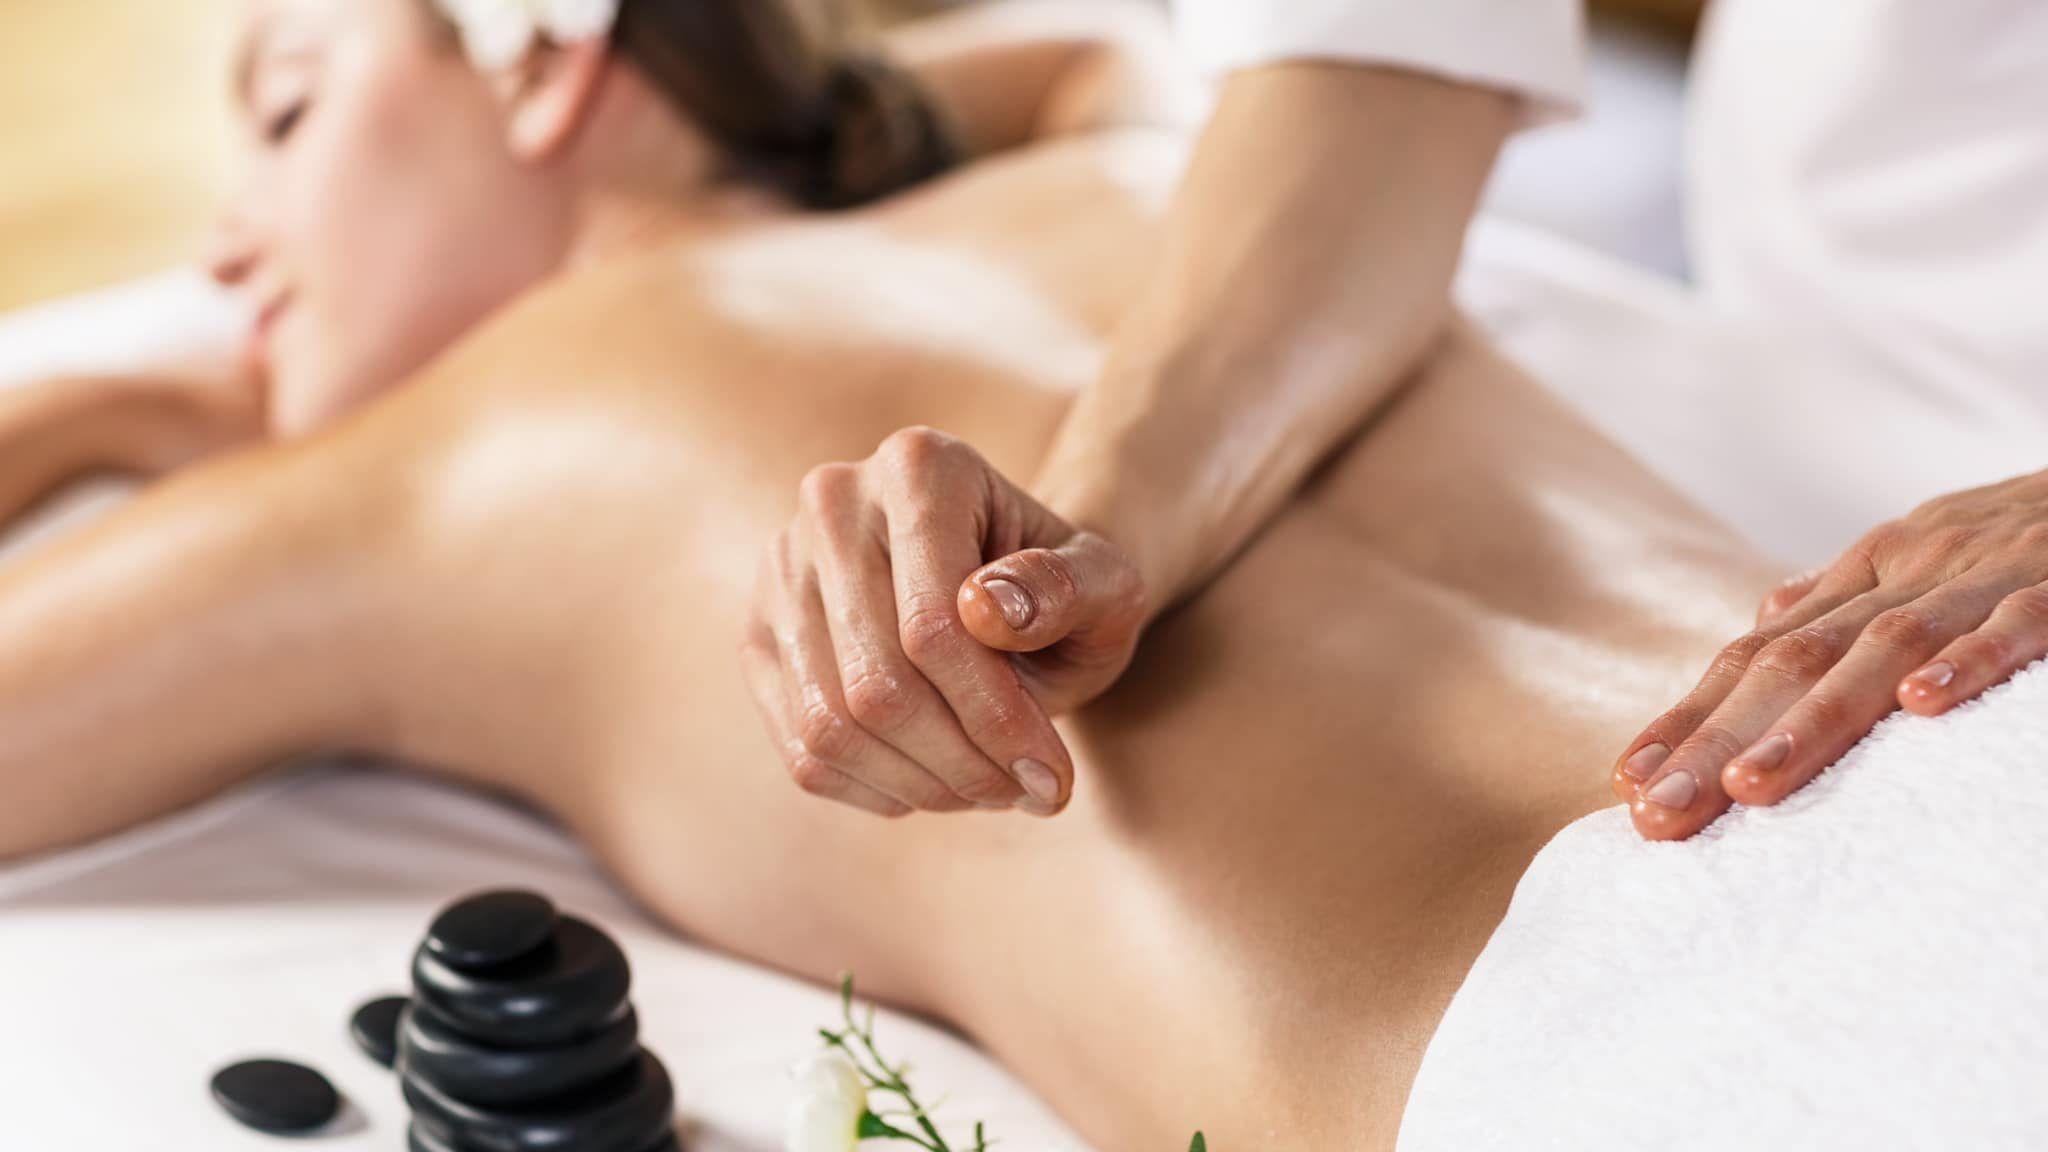 Spa InterContinental - massage therapy.